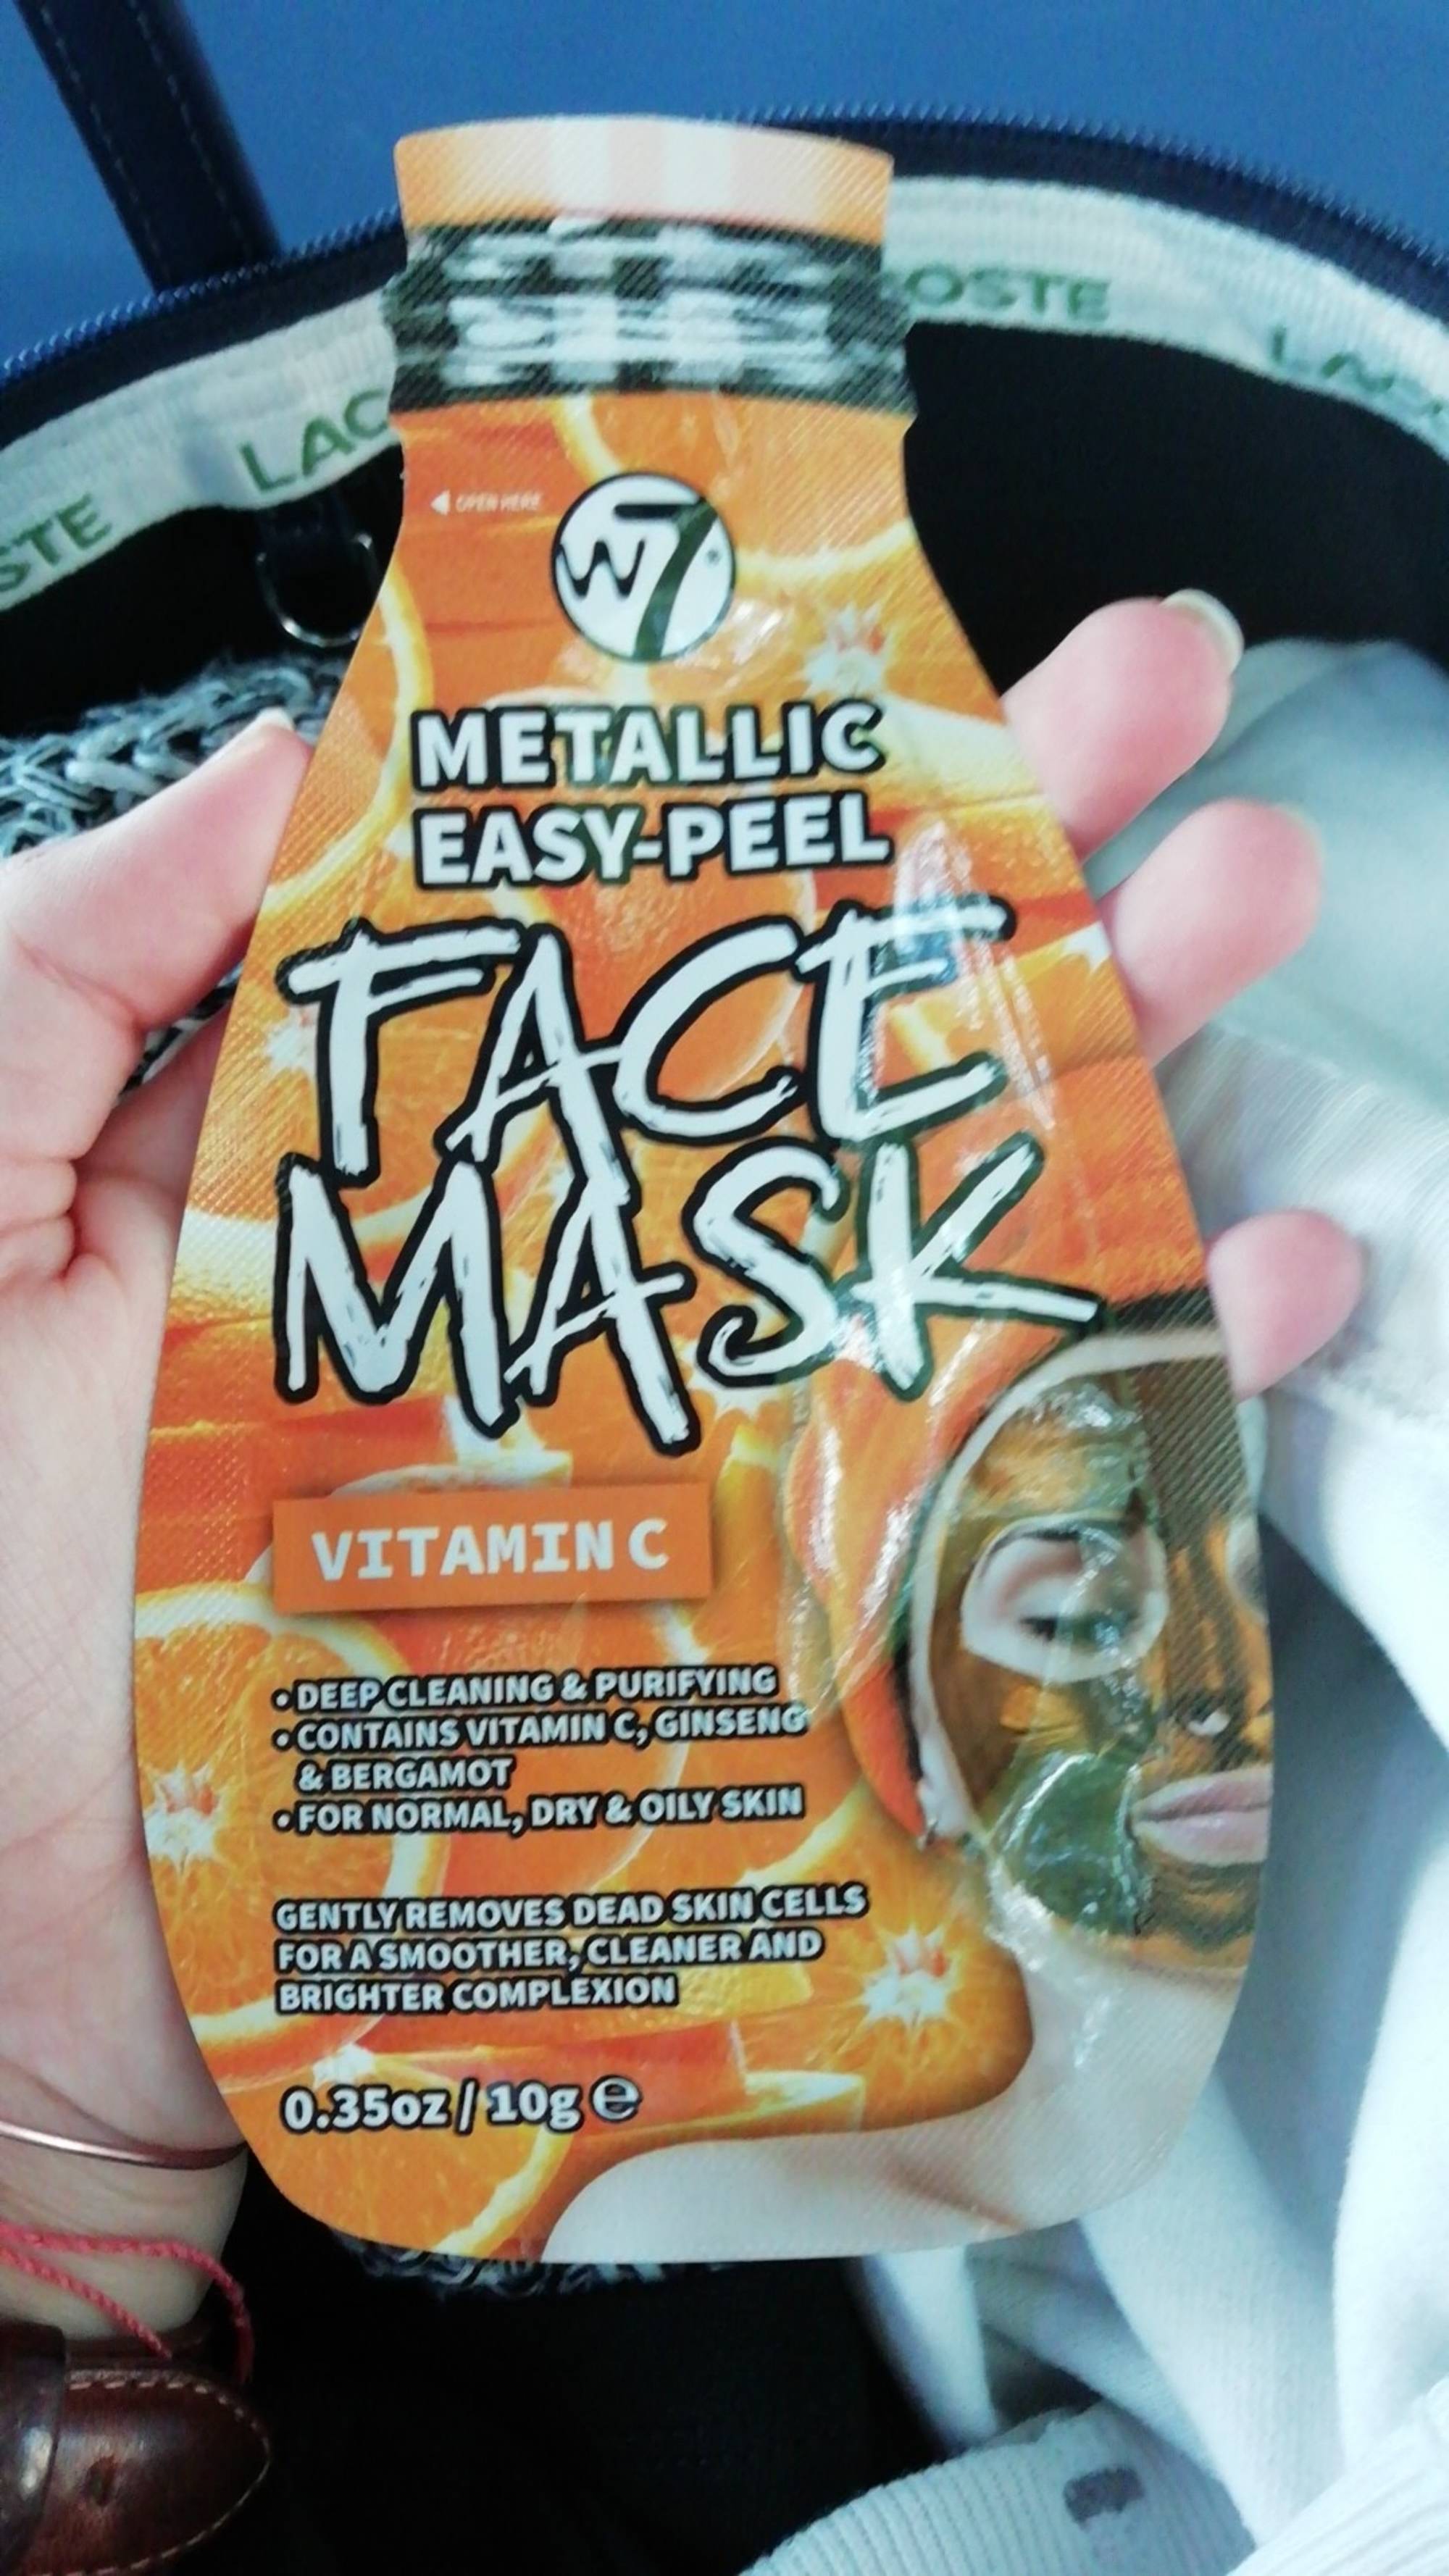 W7 - Metallic easy-peel - Face mask vitamin C